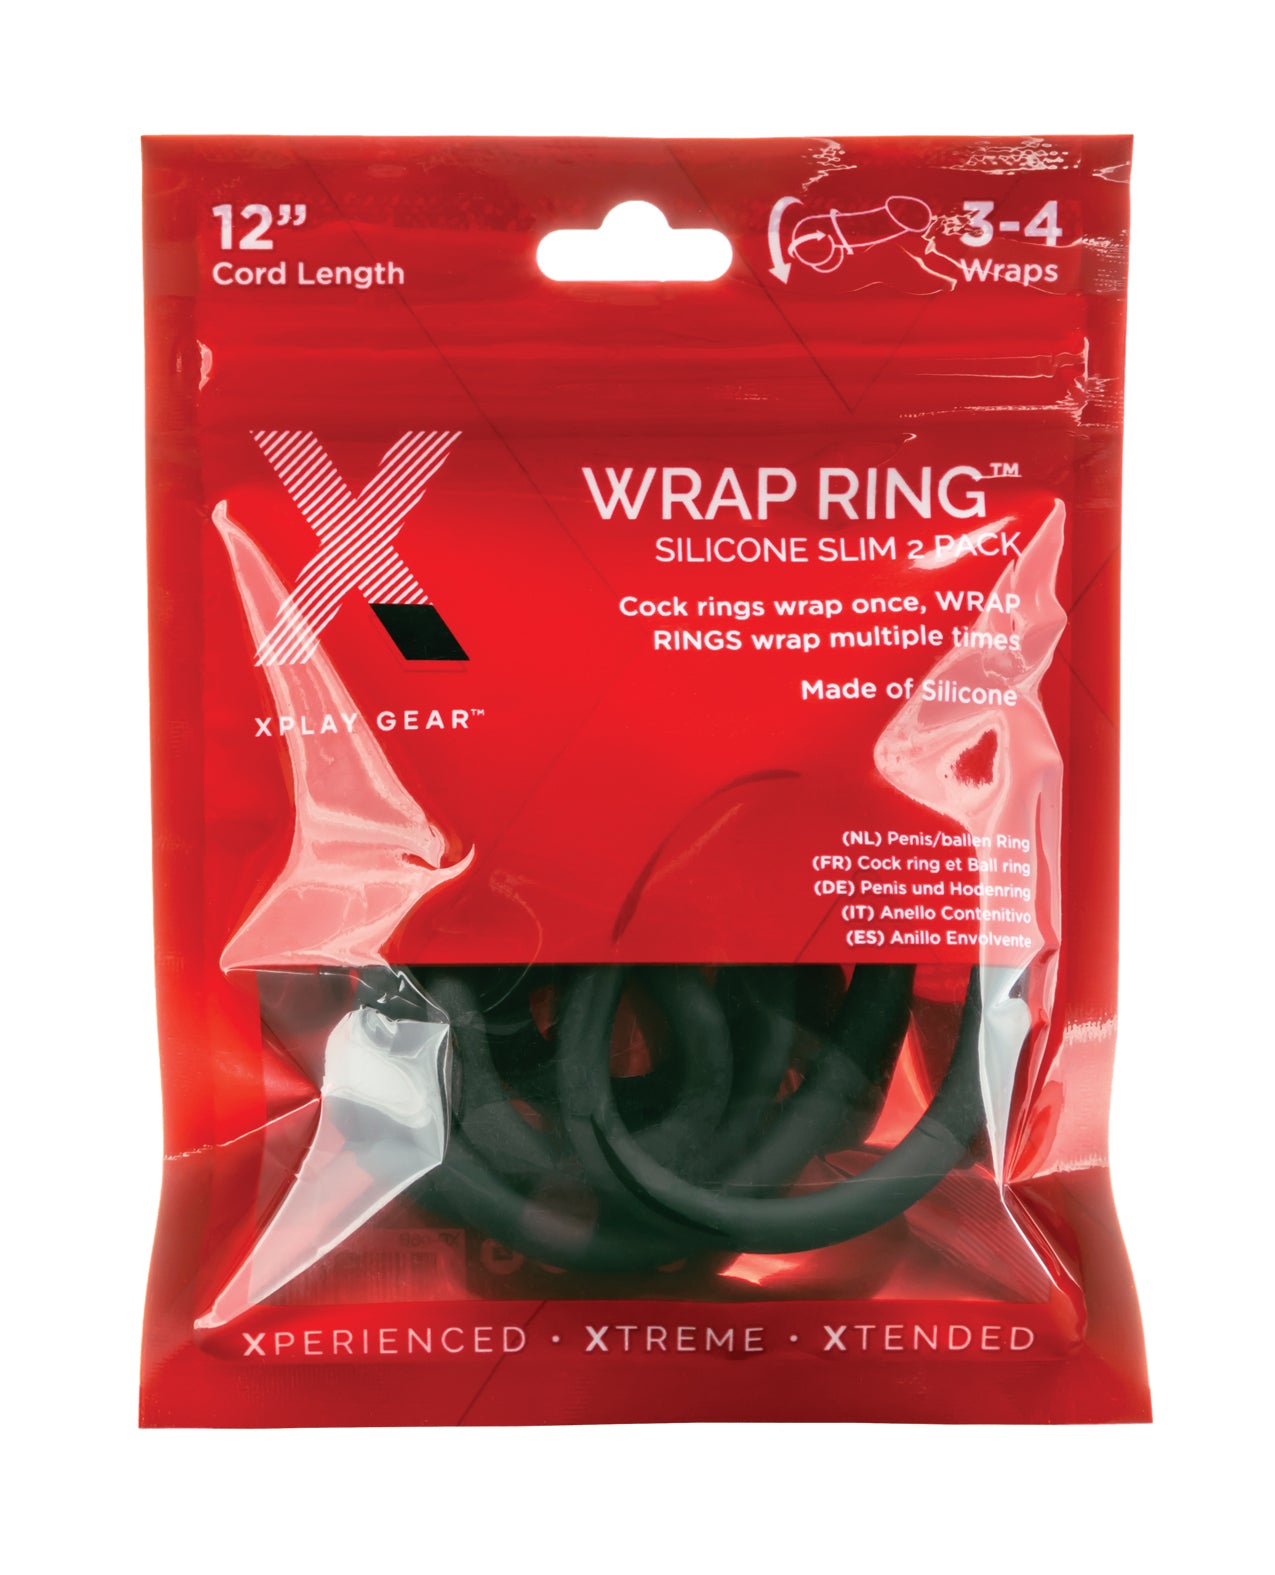 Xplay Gear Silicone Slim Wrap Ring - Black